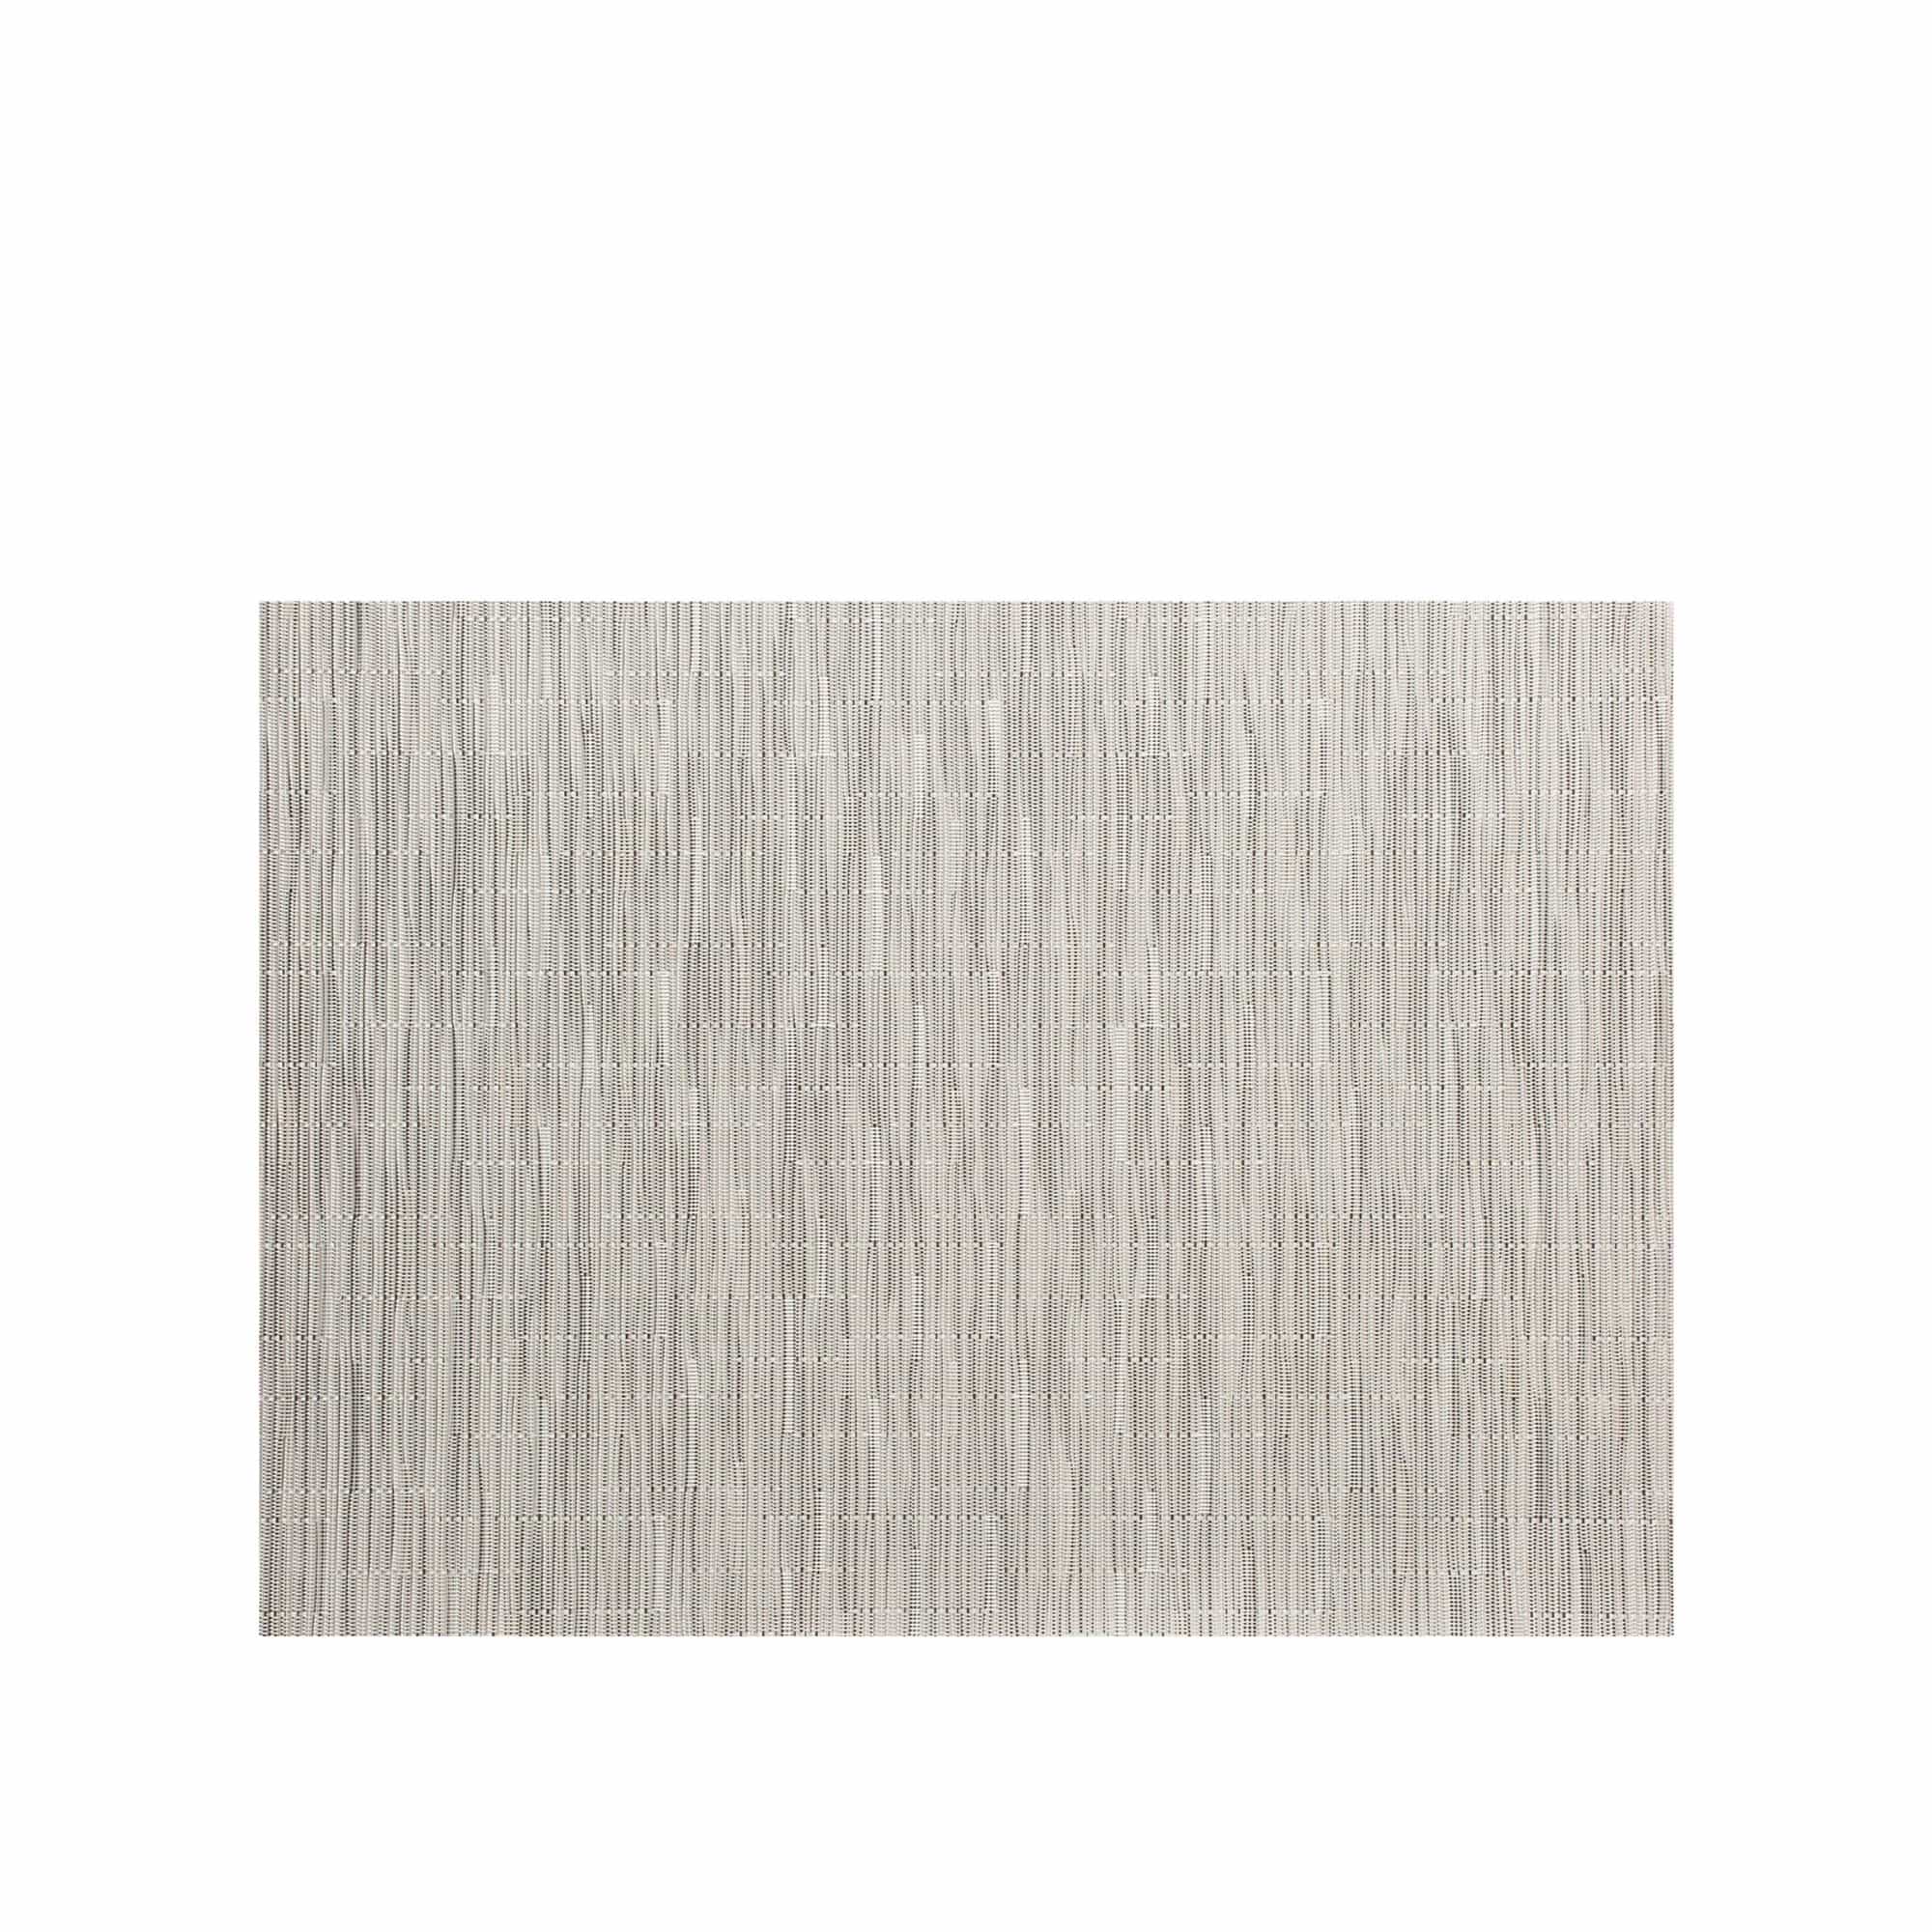 Bamboo 36x48 cm - Chalk